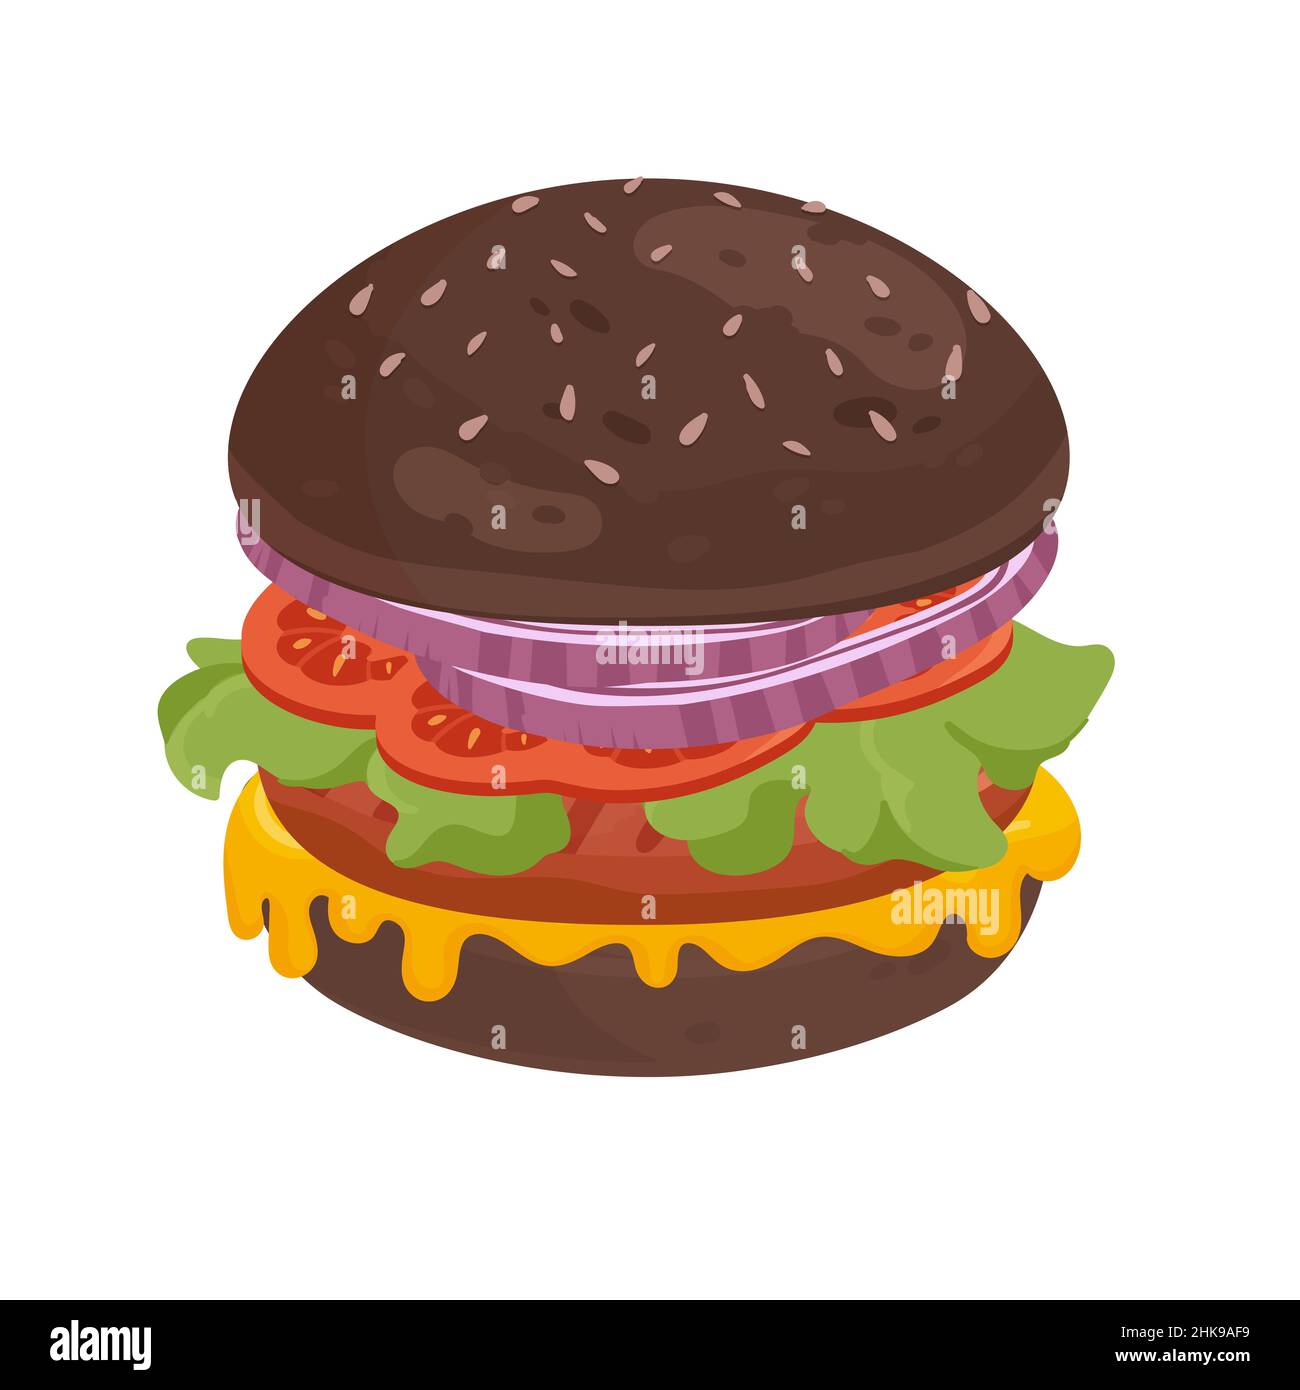 Tasty big burger grilled with dark bread buns. American fast food cuisine meal cartoon vector illustration Stock Vector